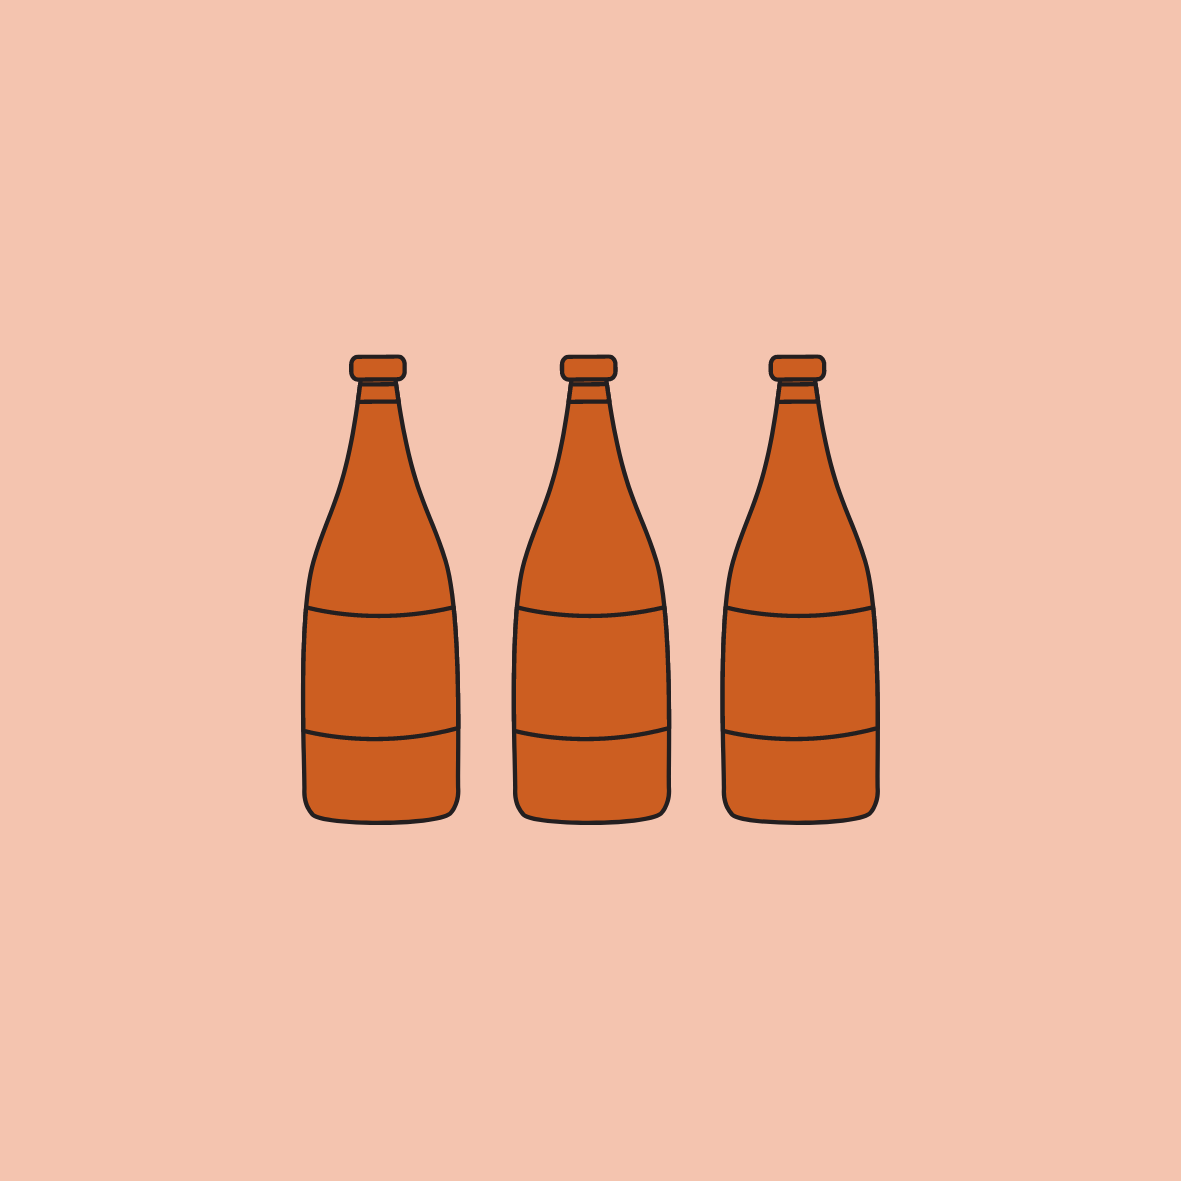 Aeble Cider Club x 3 bottles